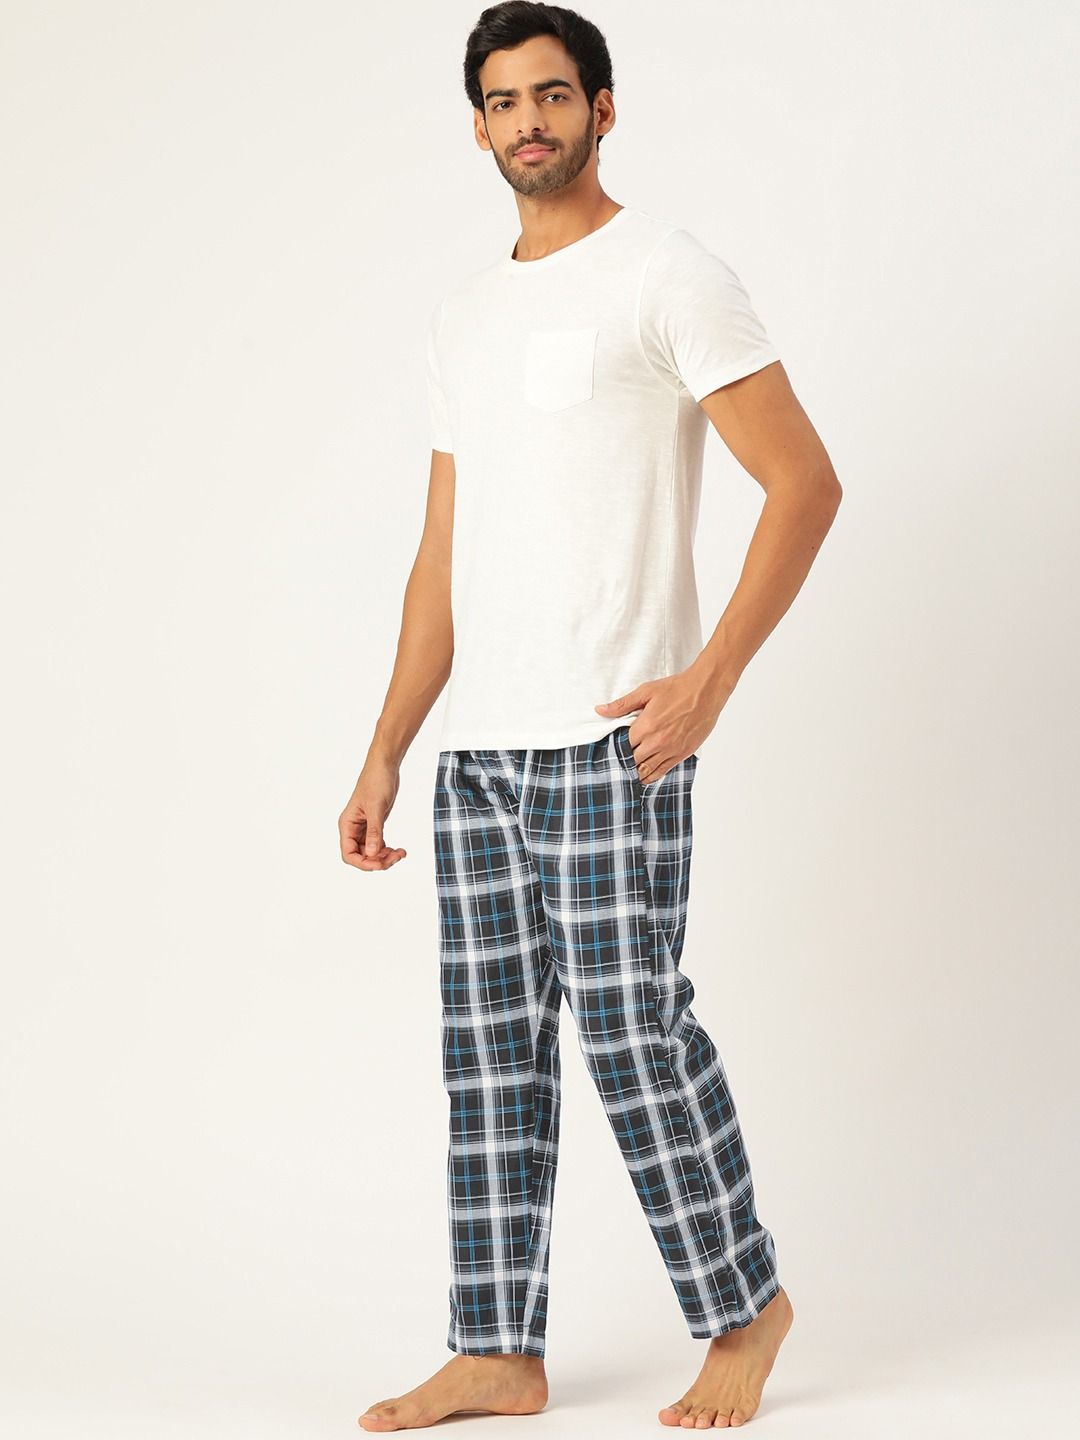 45910-1A-XL #FollowMe Polar Fleece Pajama Pants Set for Men / Sleepwear /  PJs (Medium, Black Top / White Buffalo Plaid Pant) - Just Love Fashion